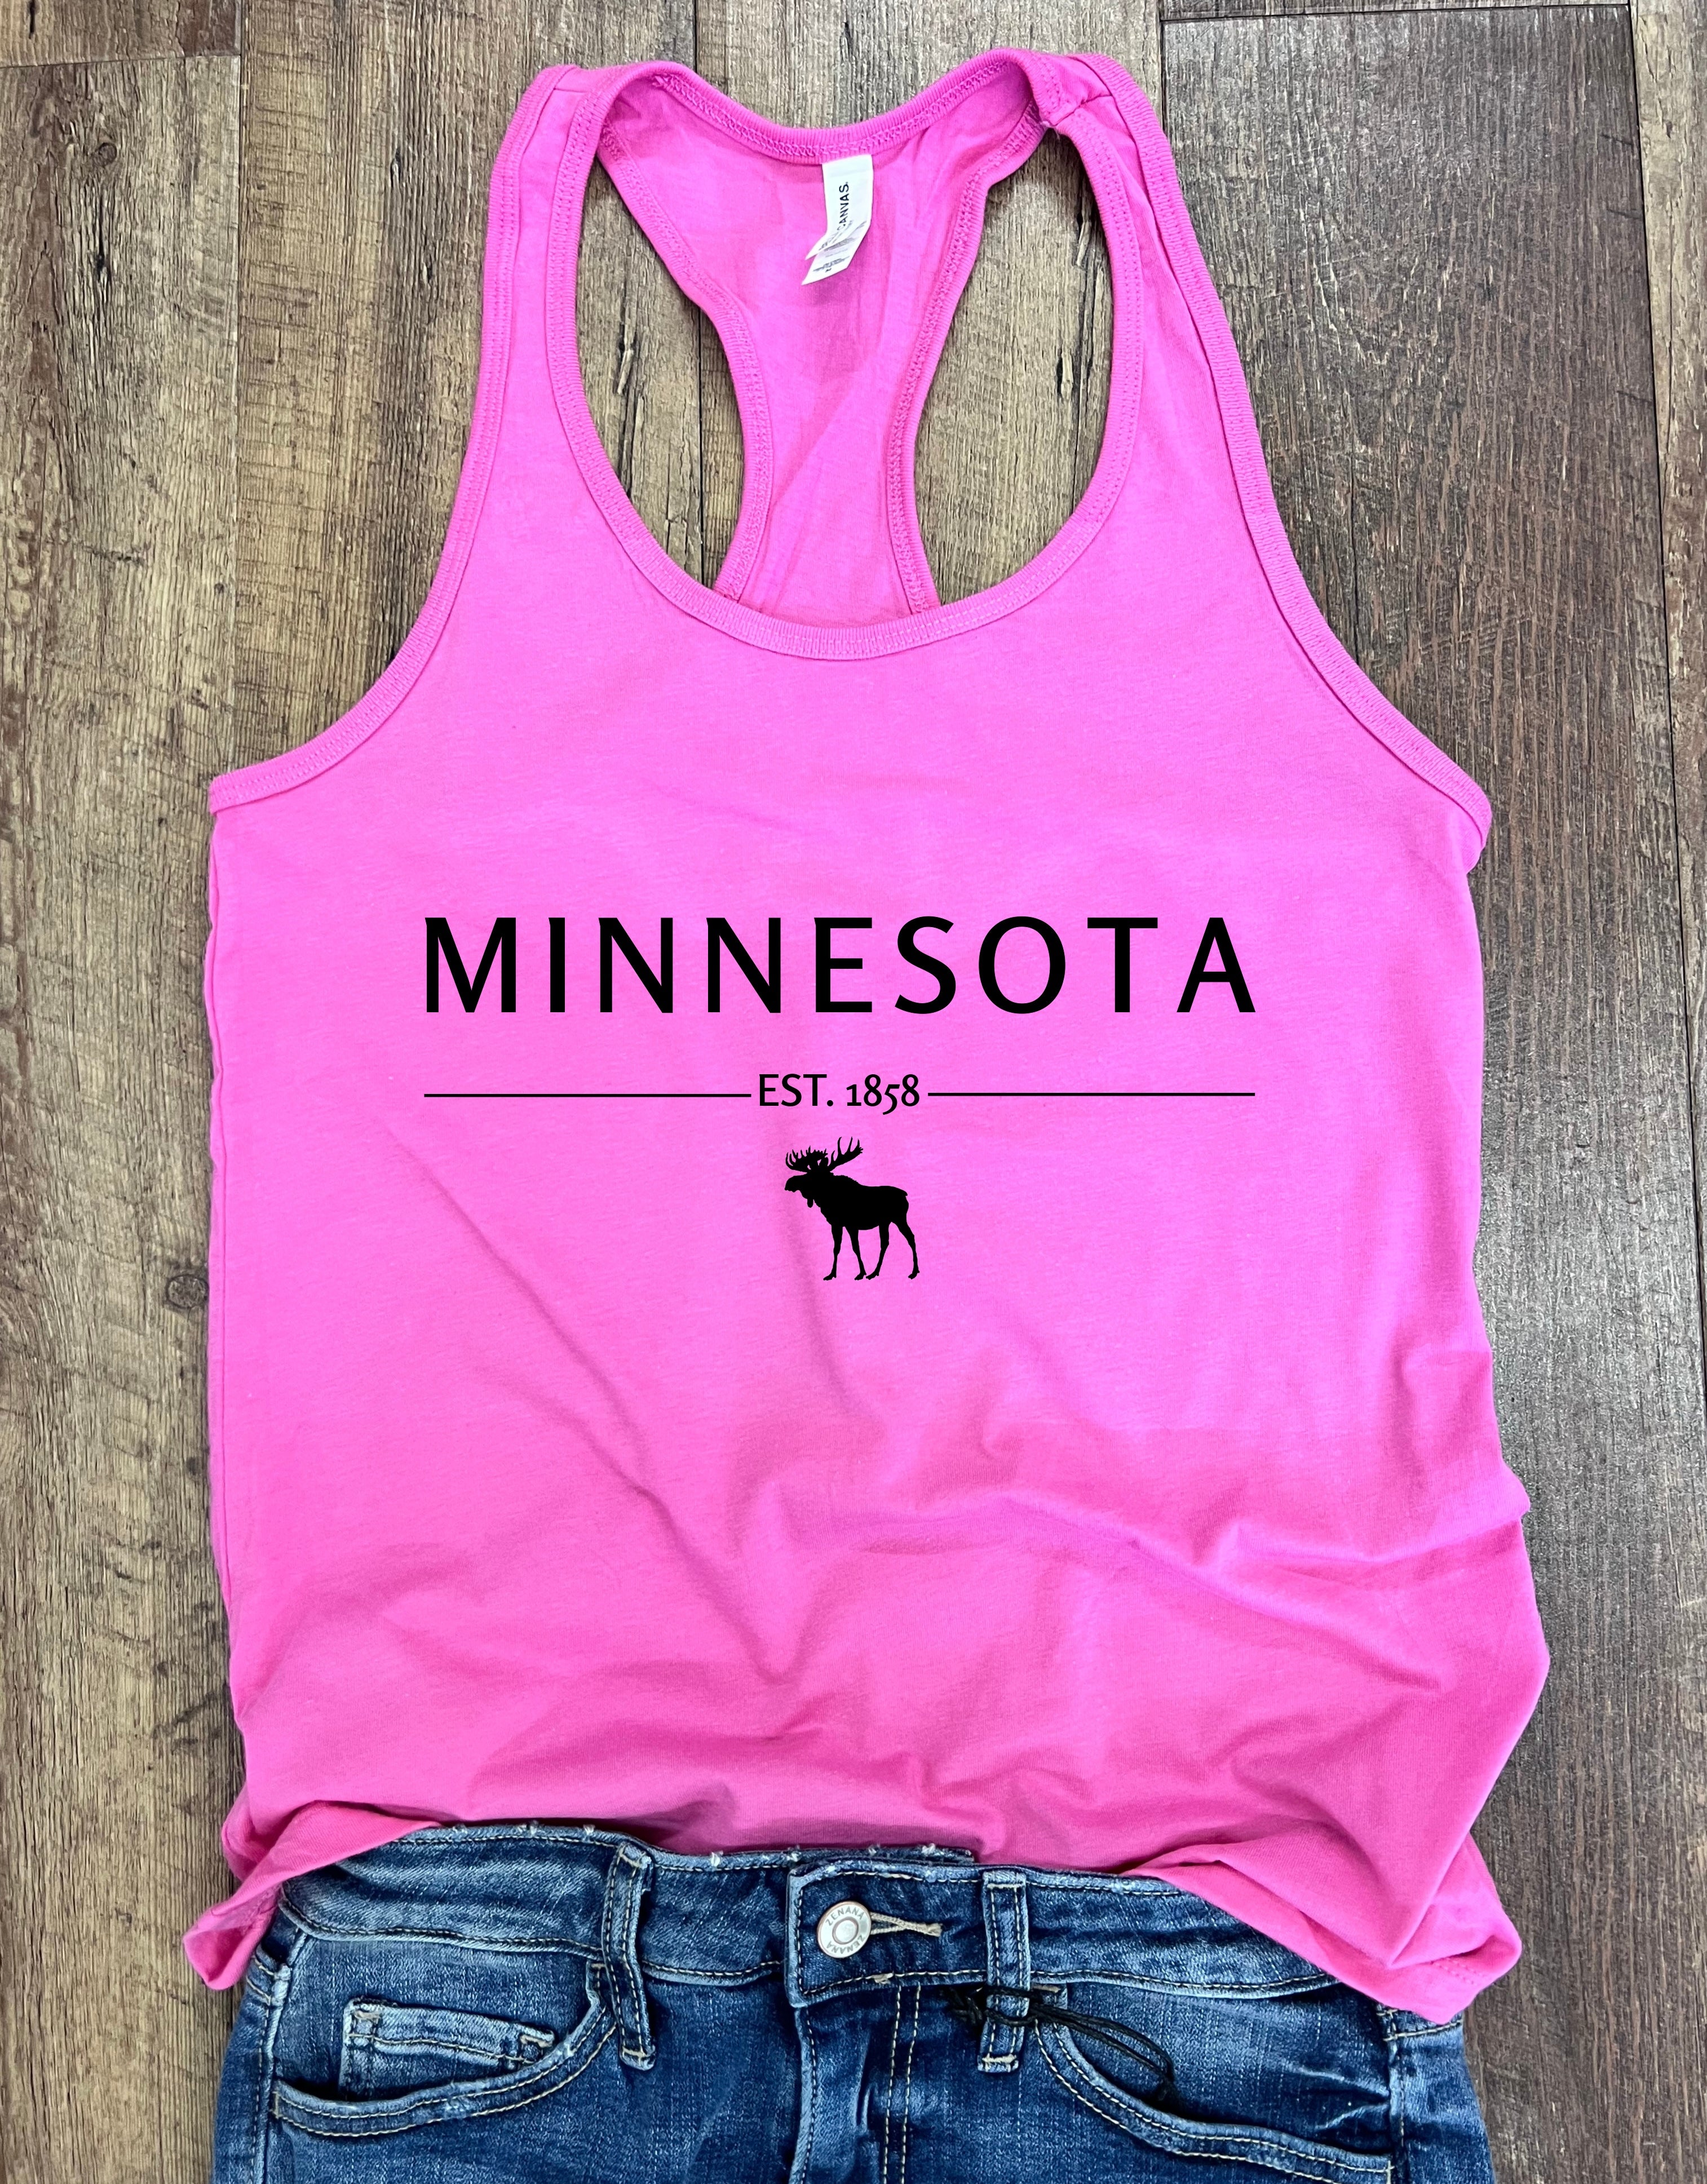 Minnesota 1858 Tank in Pink